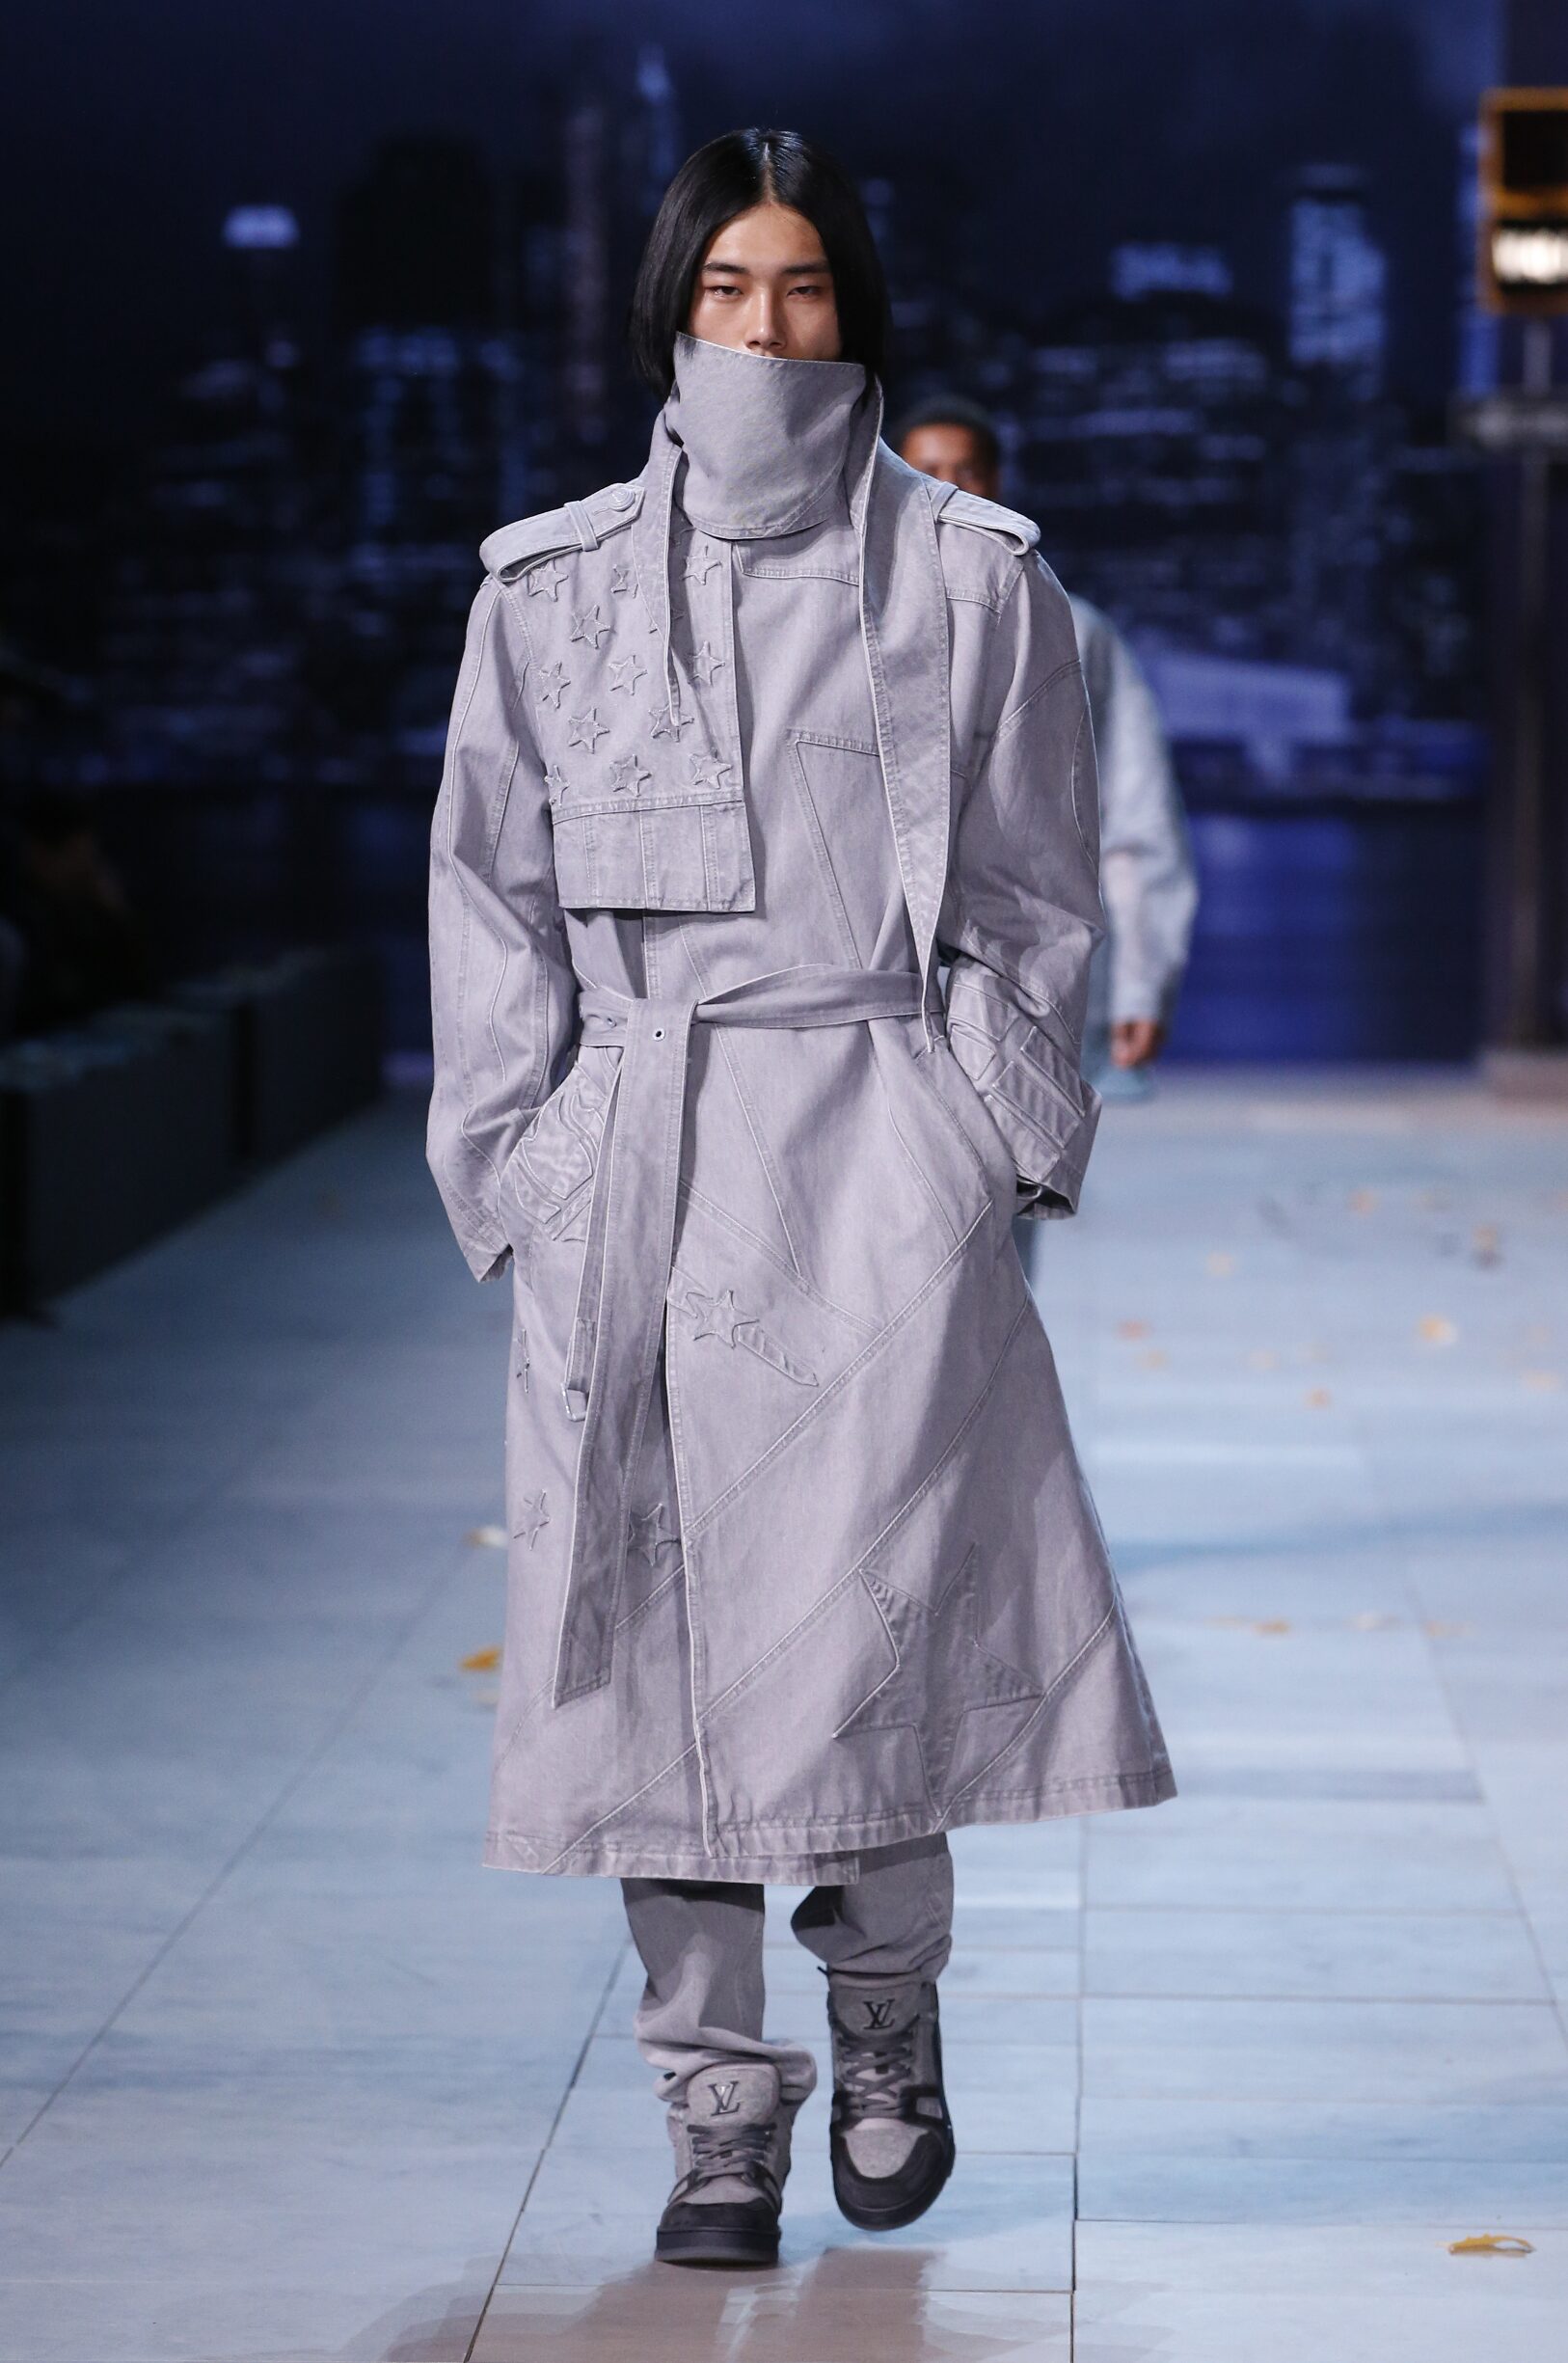 Louis Vuitton presents Men's Fall Winter 2019 collection